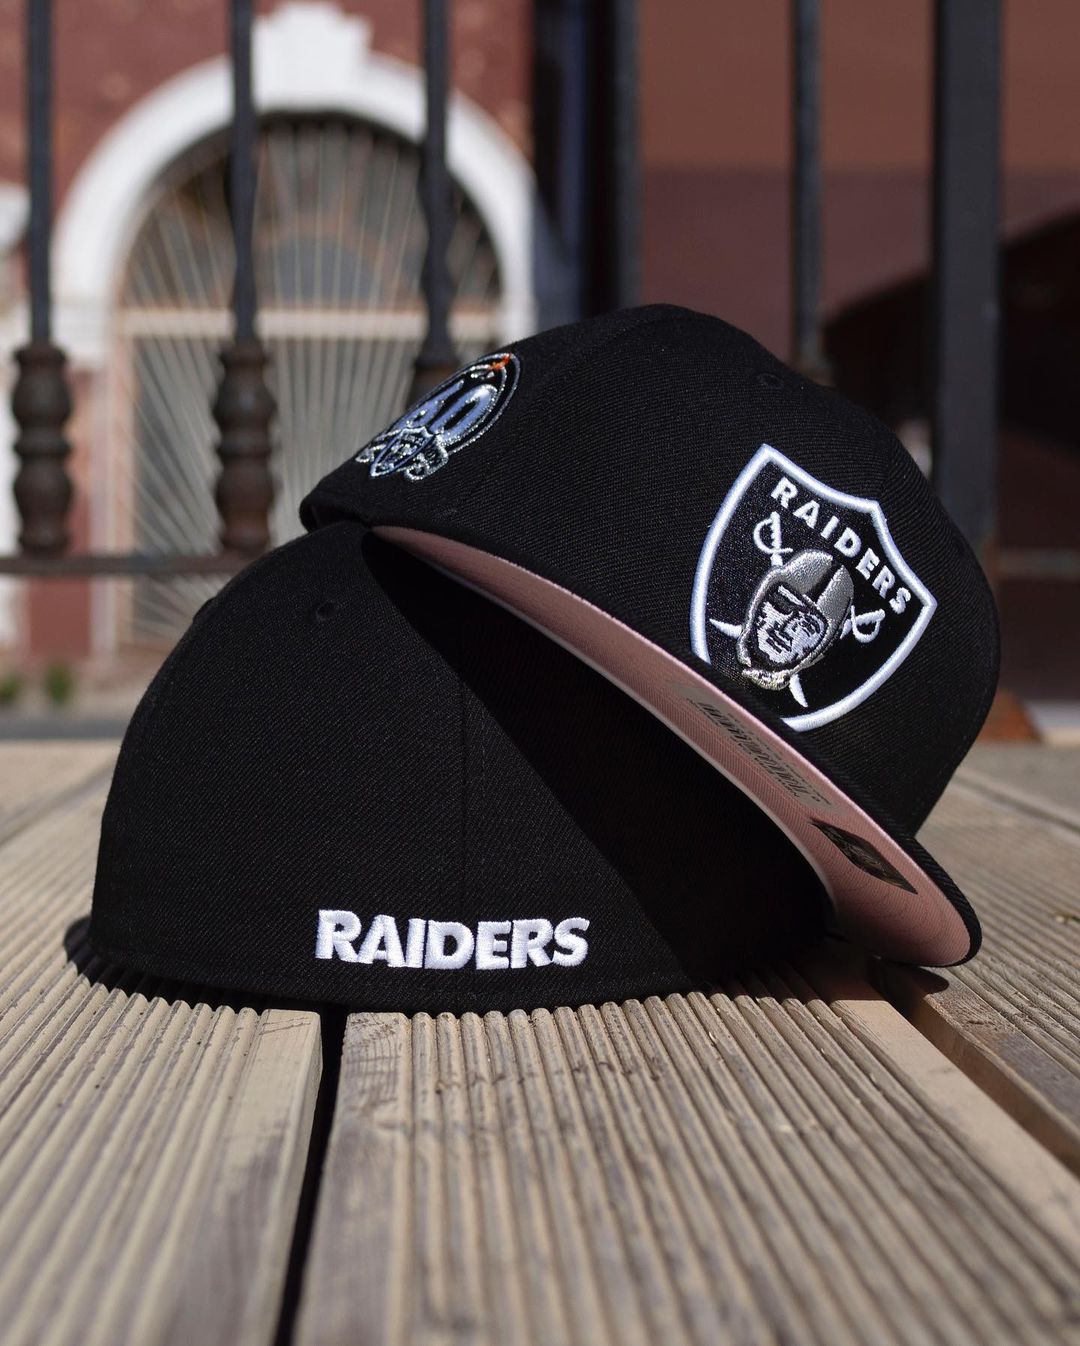 Las vegas Raiders Fitted Hats